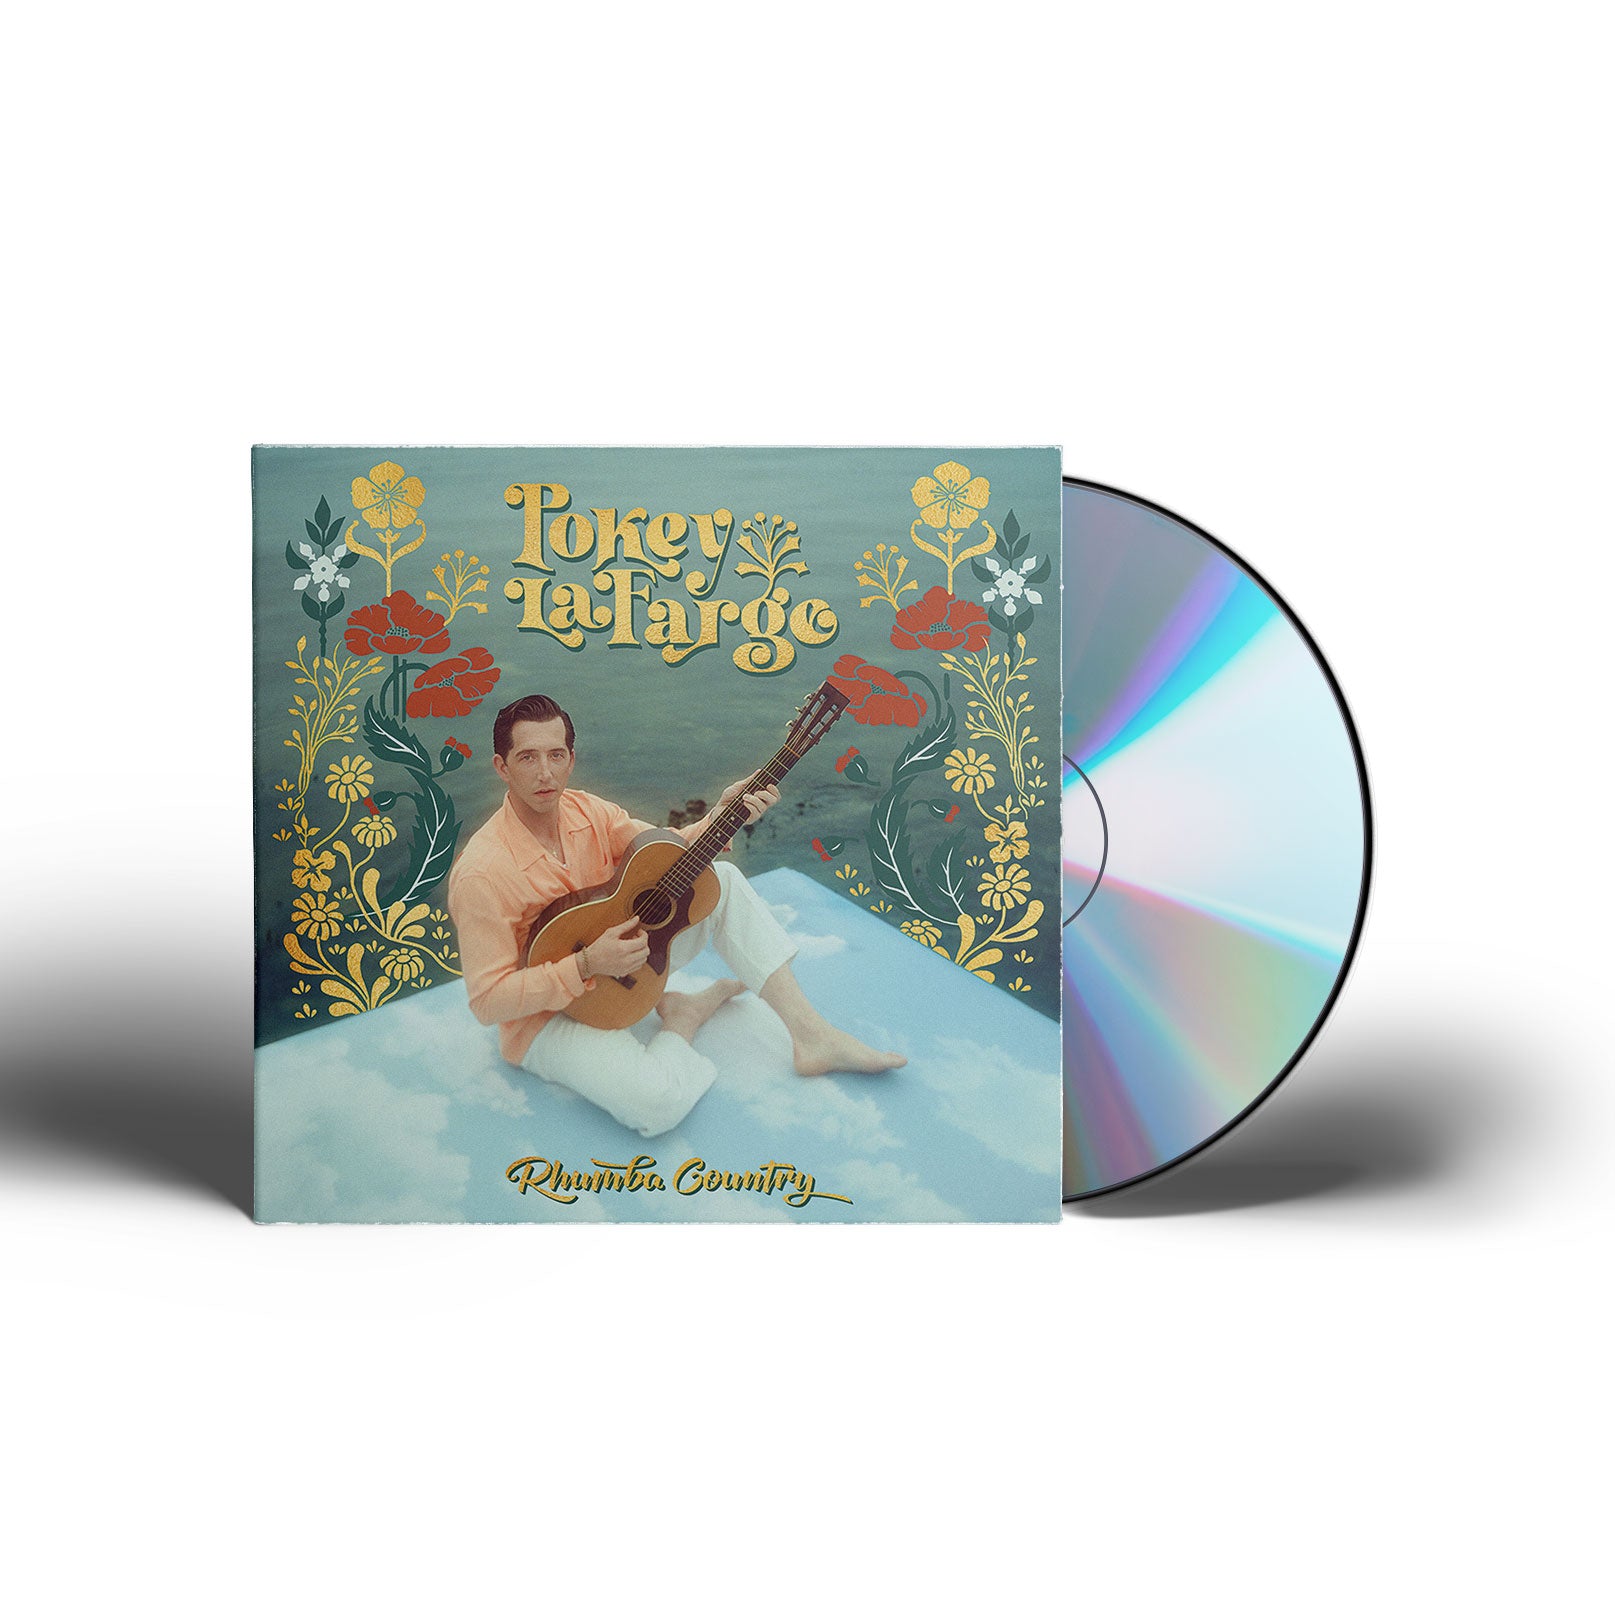 Pokey LaFarge - Rhumba Country [CD]